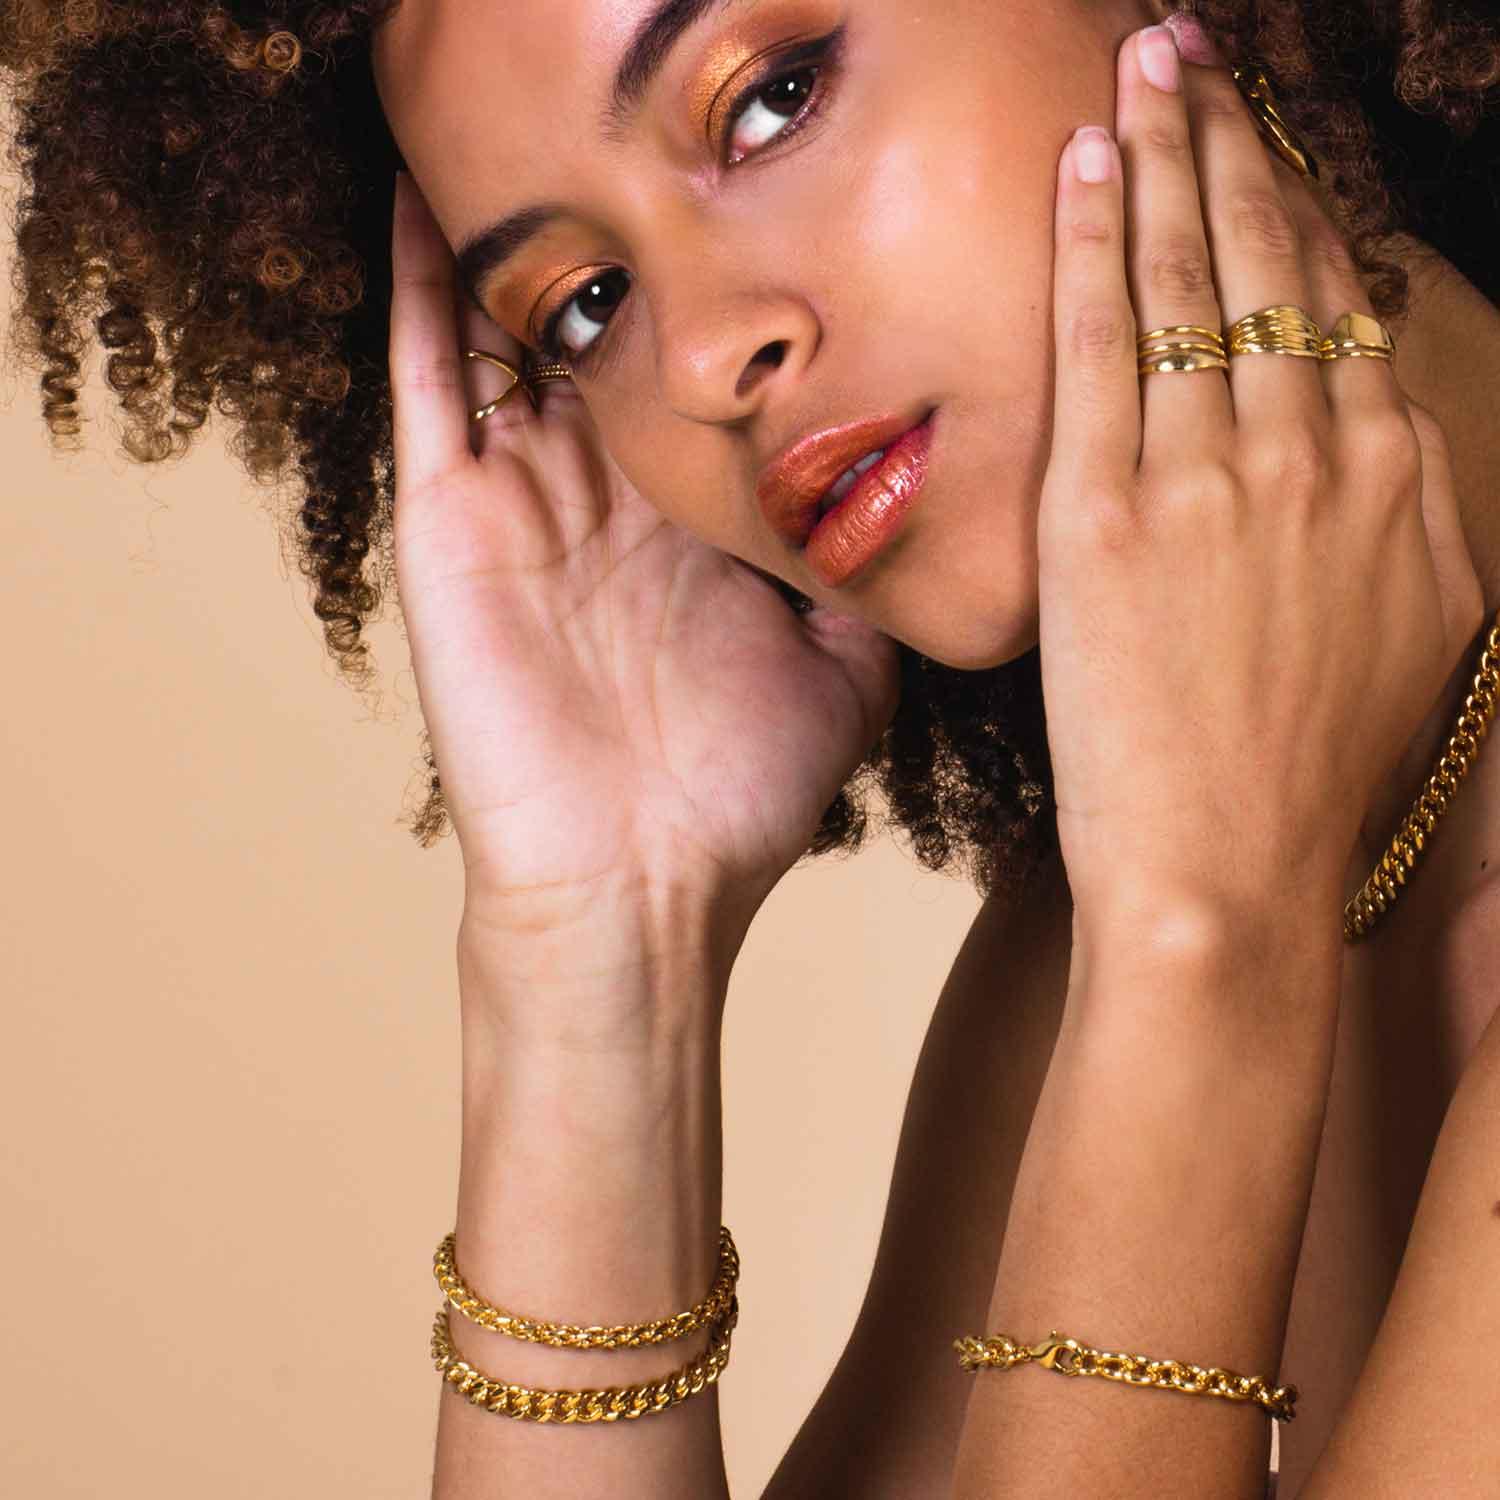 Gold chunky chain bracelet | GiB Jewels